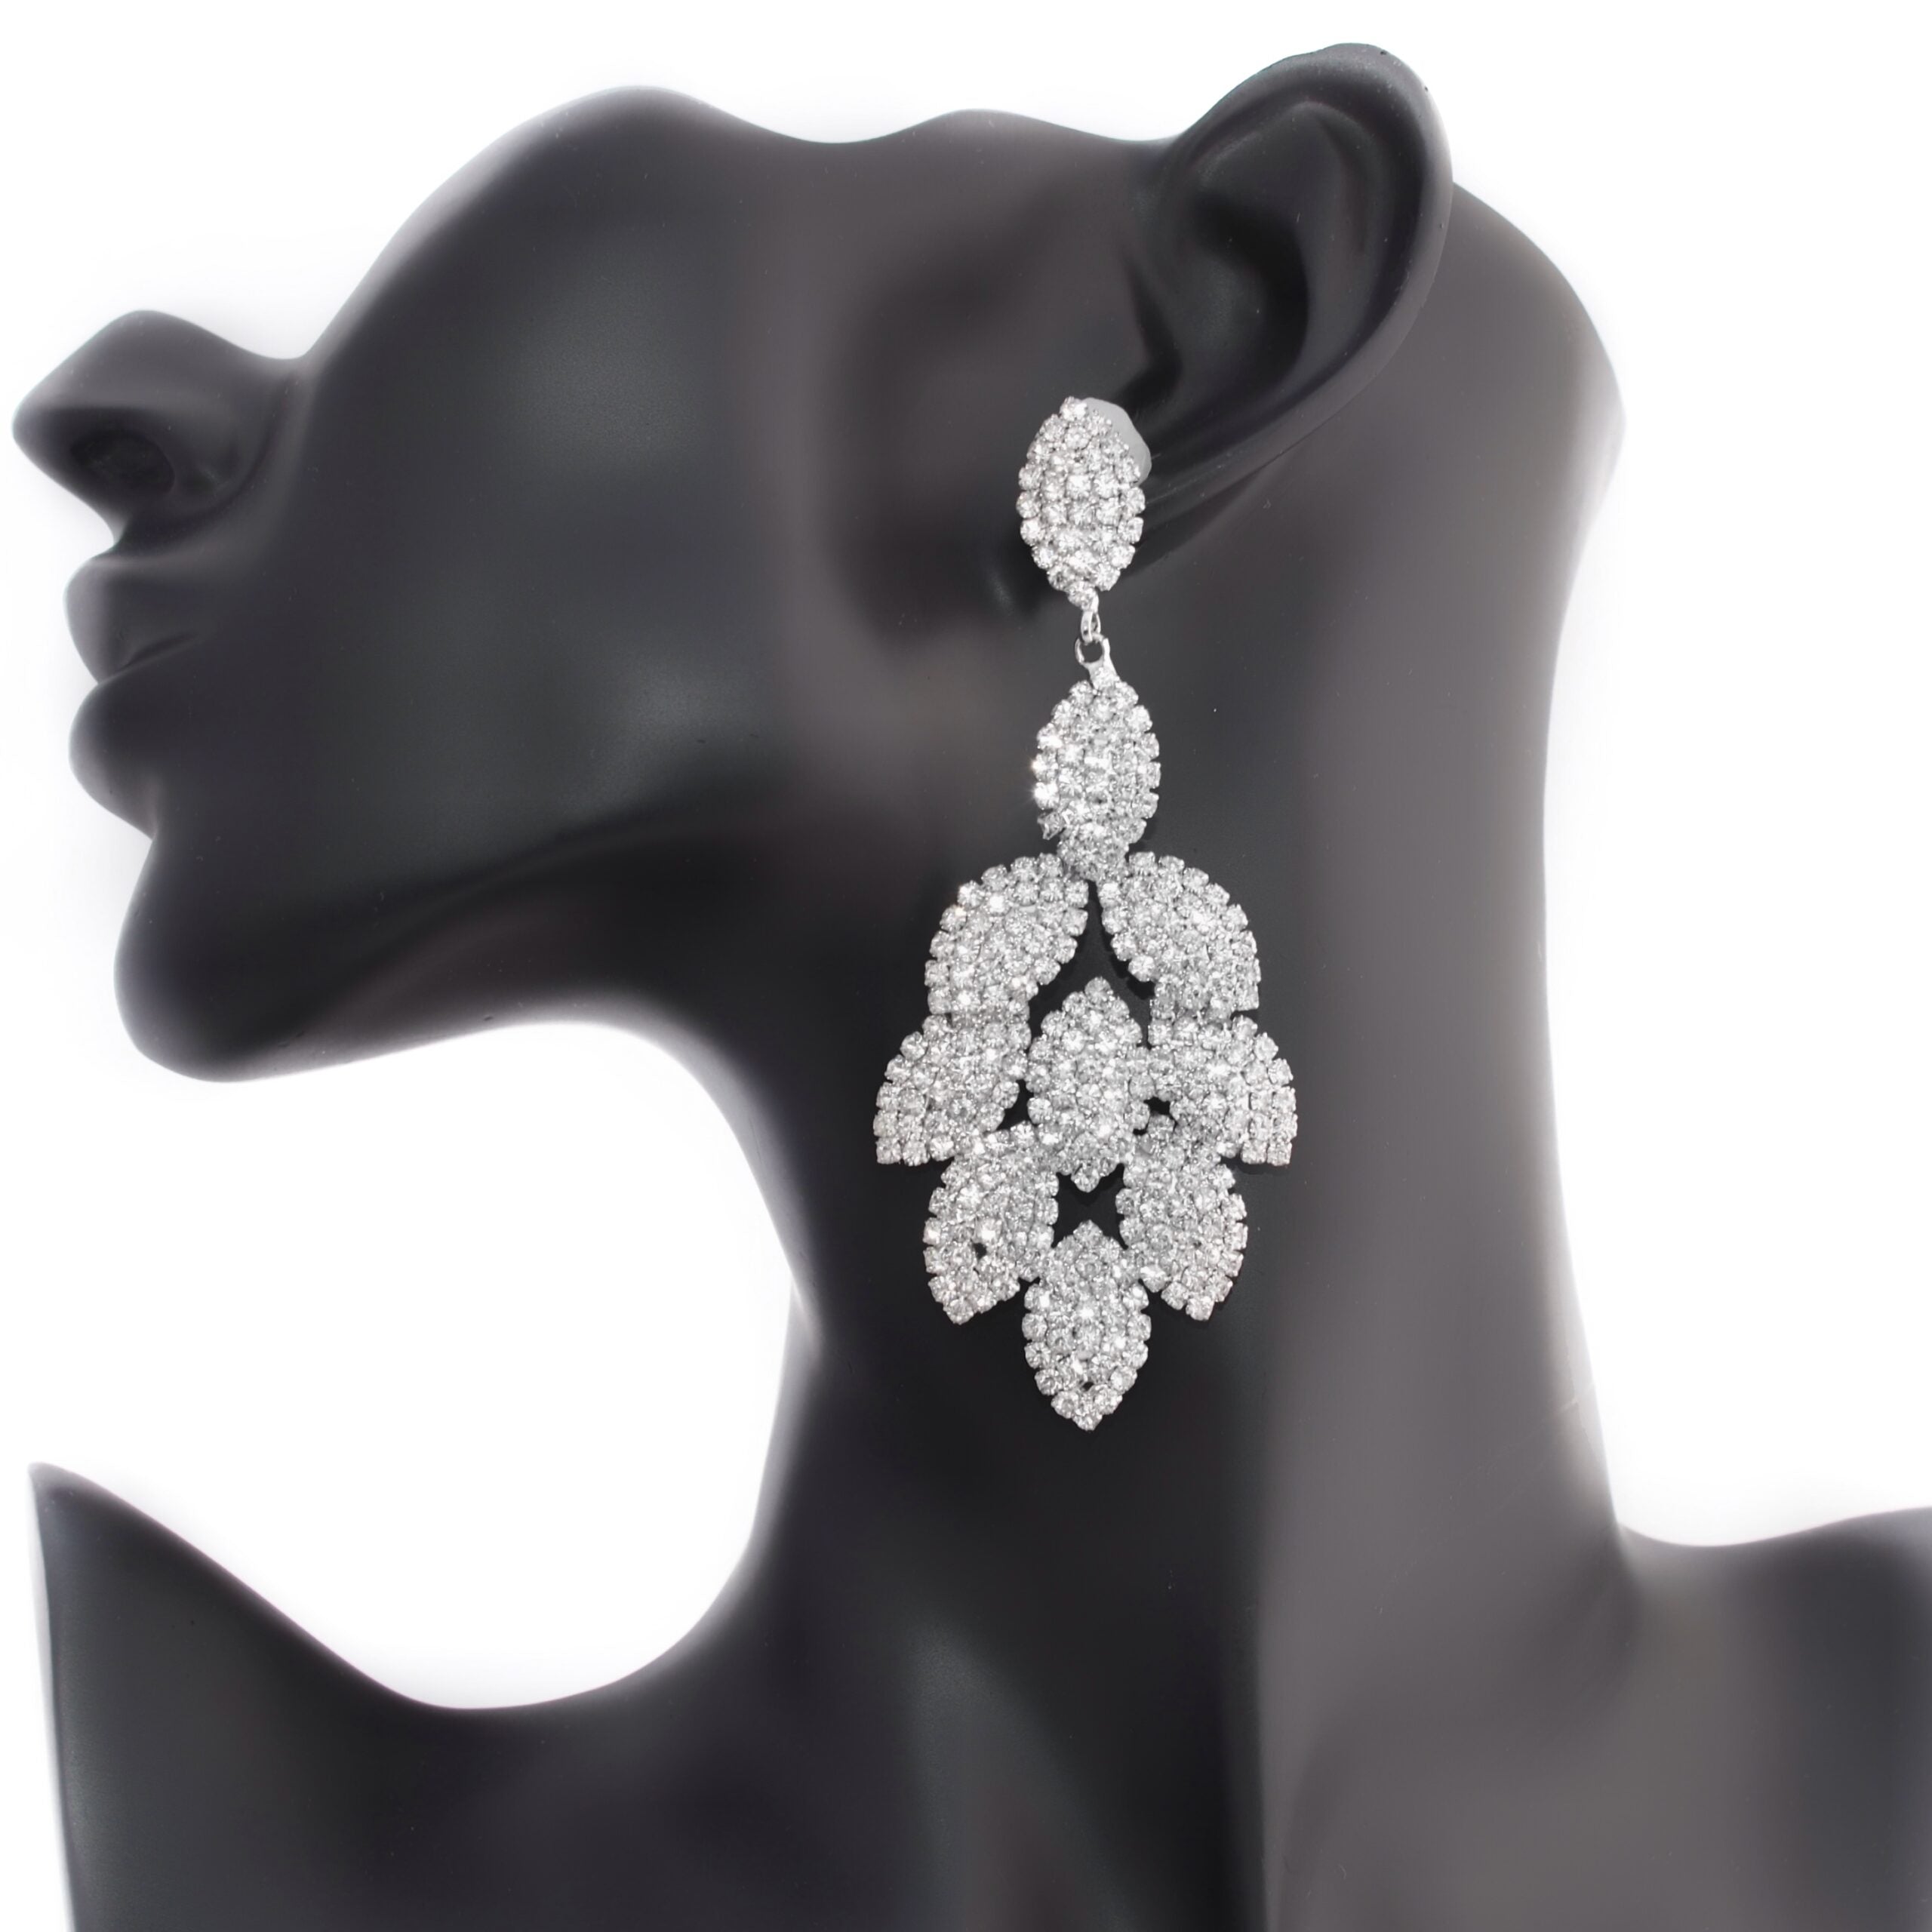 Selina - clear silver pave rhinestone earrings